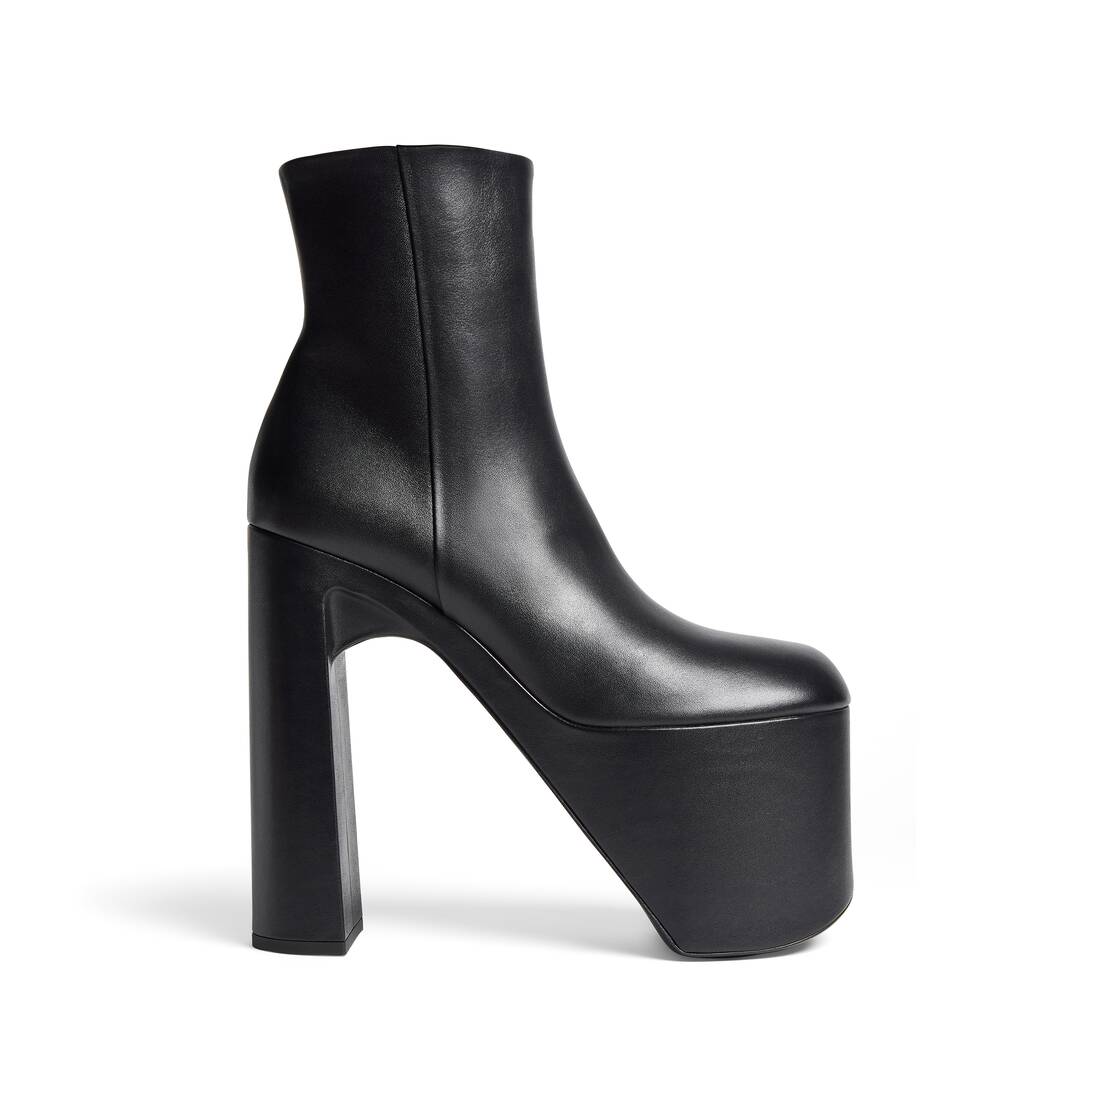 Toestep Present Our New Latest Trending Design Solid Platform Wedges Heels  Sandals For Women & Girls